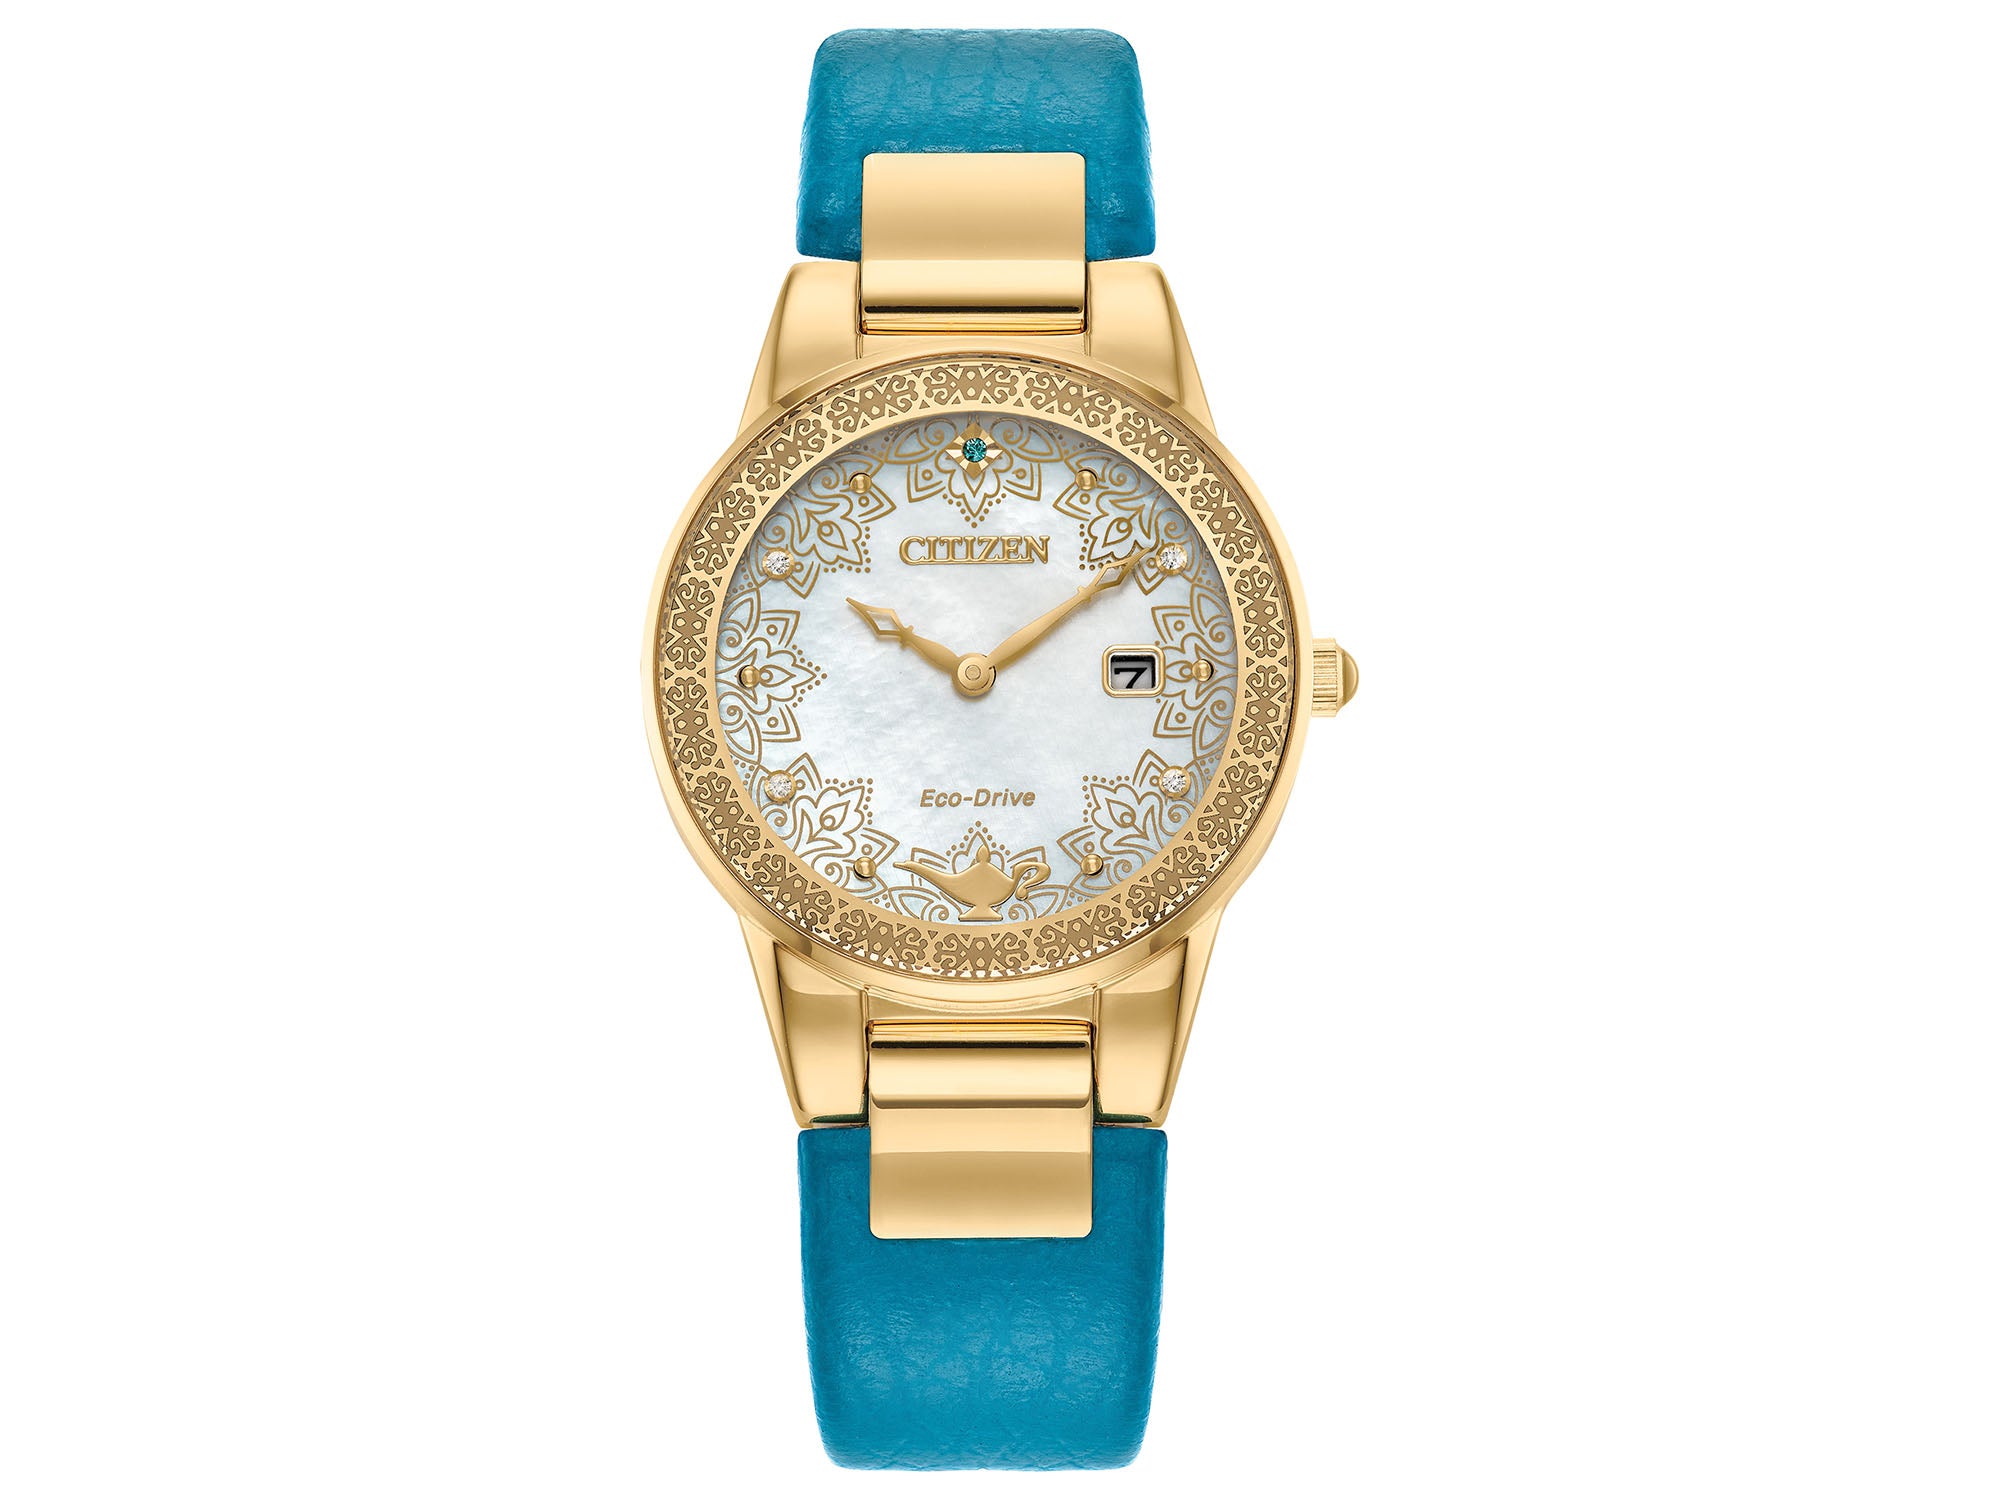 Formand dragt Behov for 25 Best Women's Watches from Under $500 to Over $150K | Teddy Baldassarre